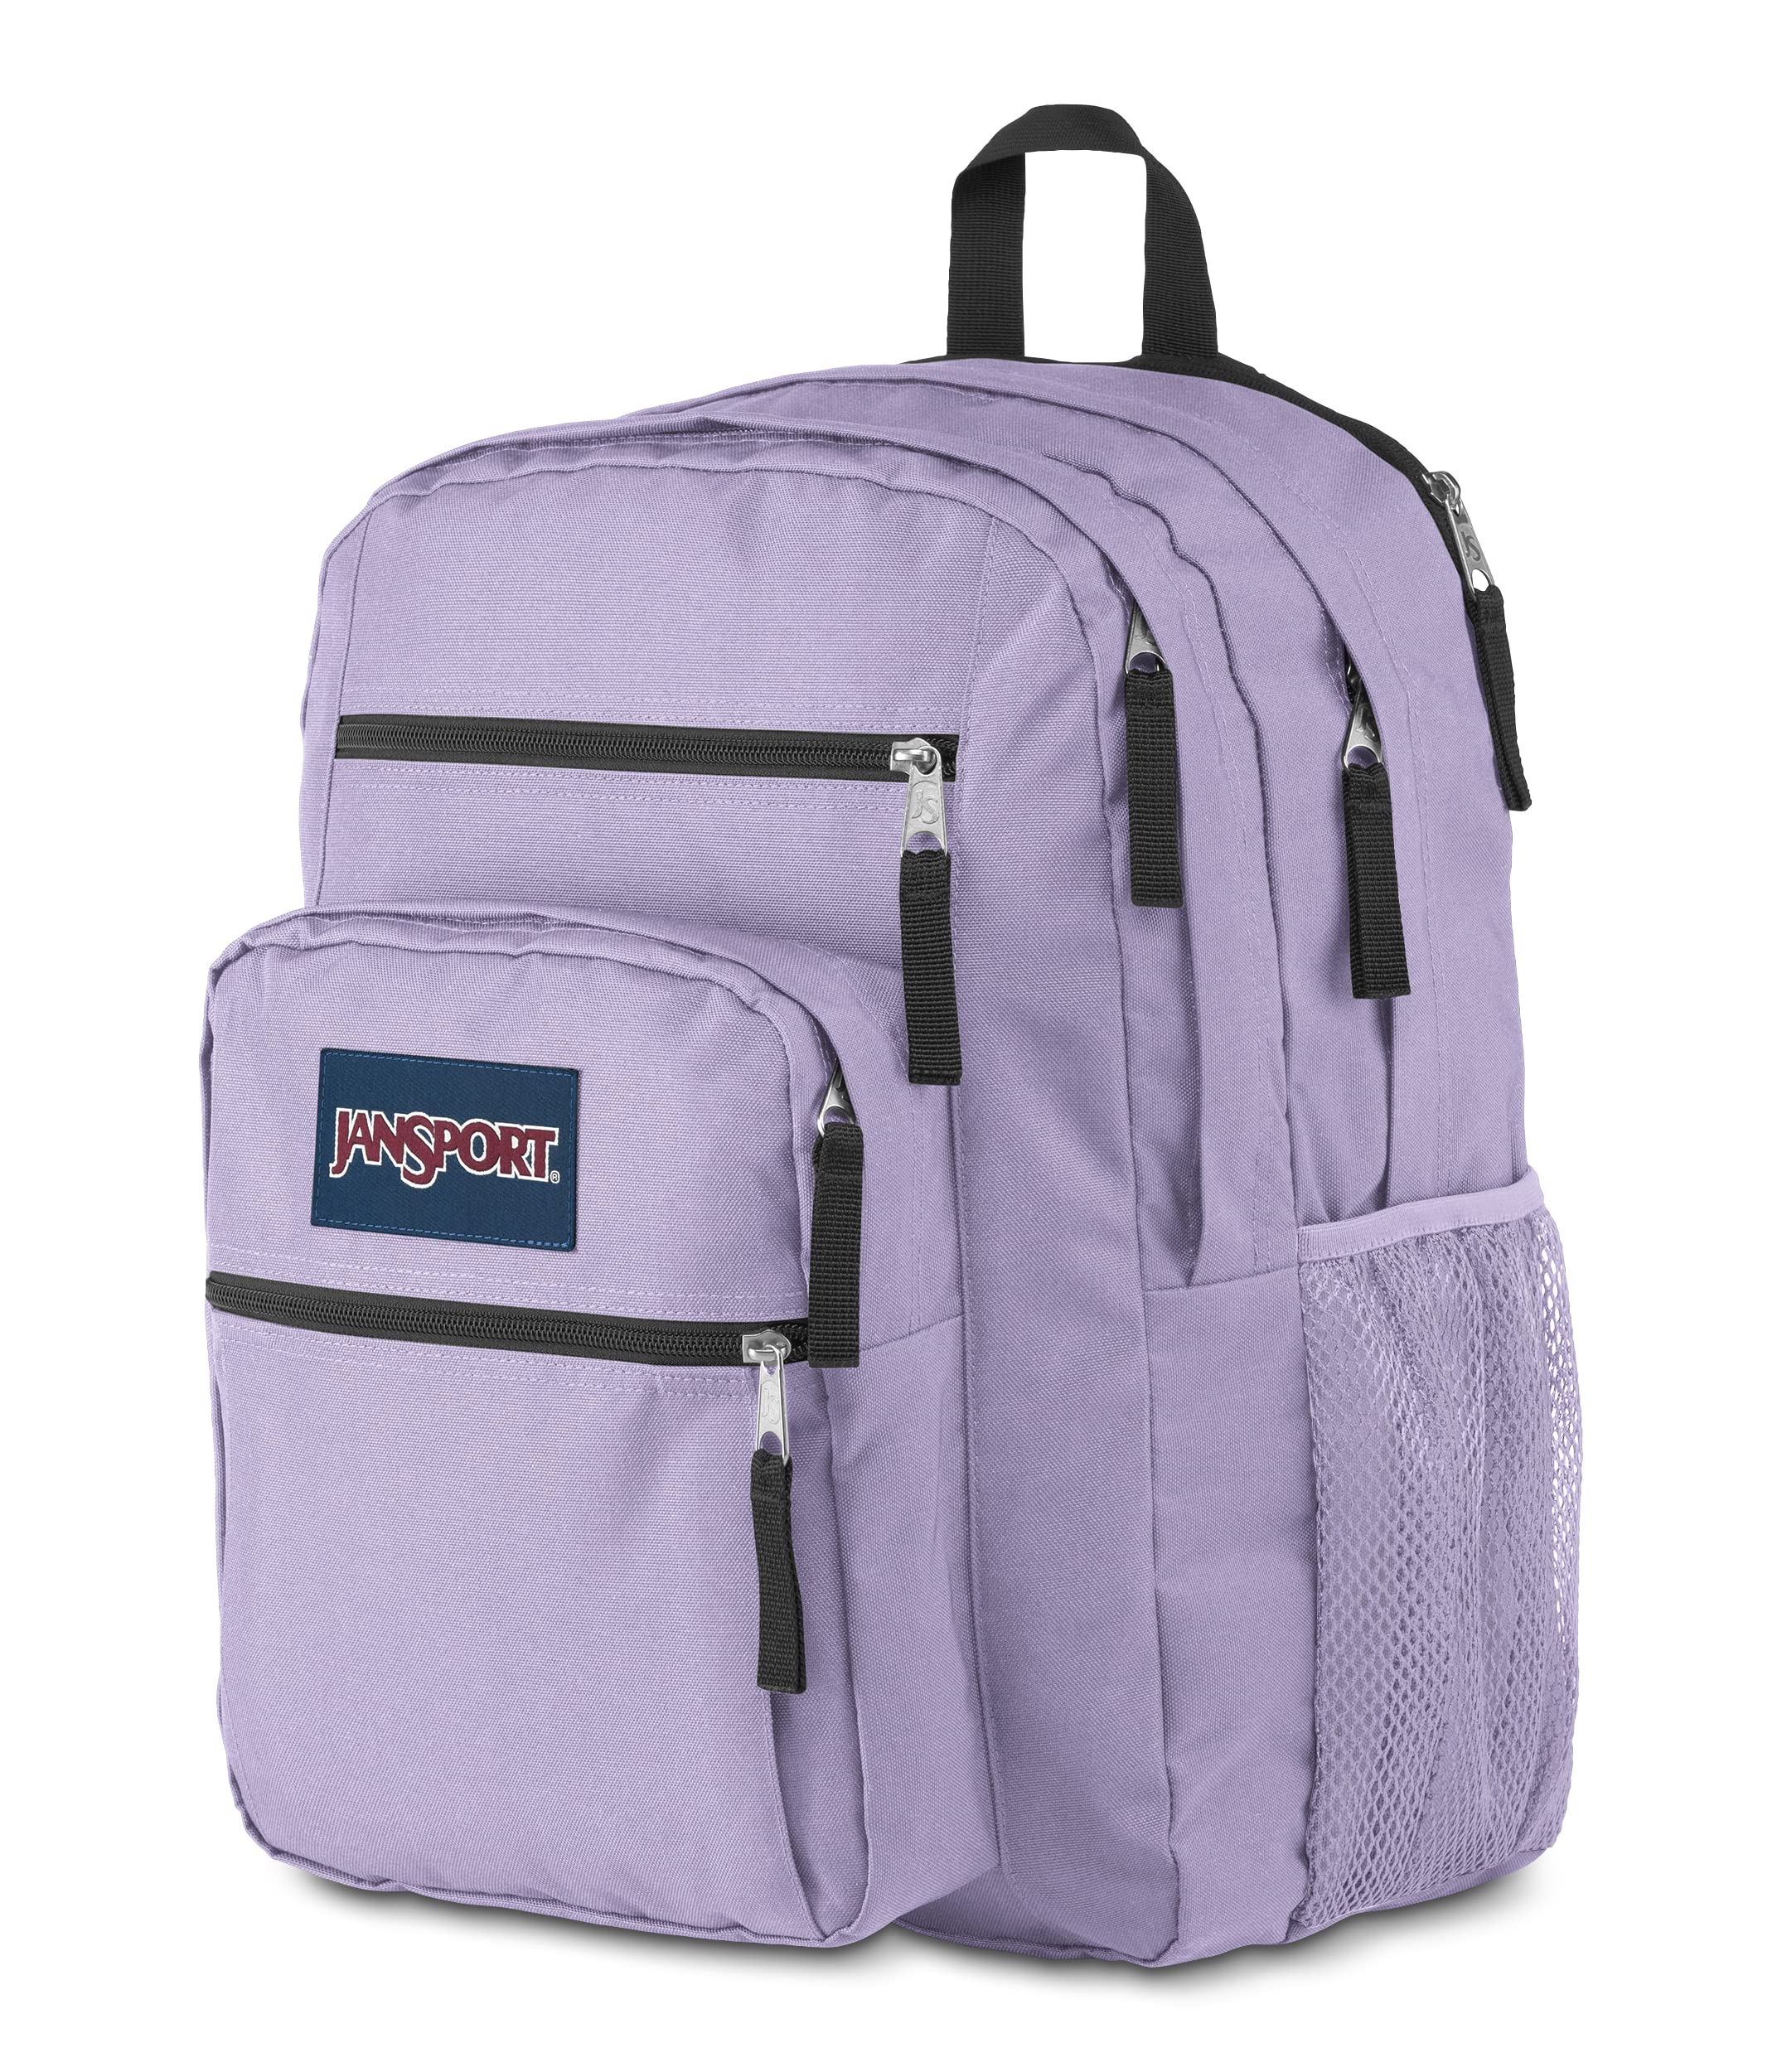 JanSport Big Laptop Backpack for College - High-Quality Computer Bag with 2 Compartments, Ergonomic Shoulder Straps, 15” Laptop Sleeve, Haul Handle - Book Rucksack, Pastel Lilac